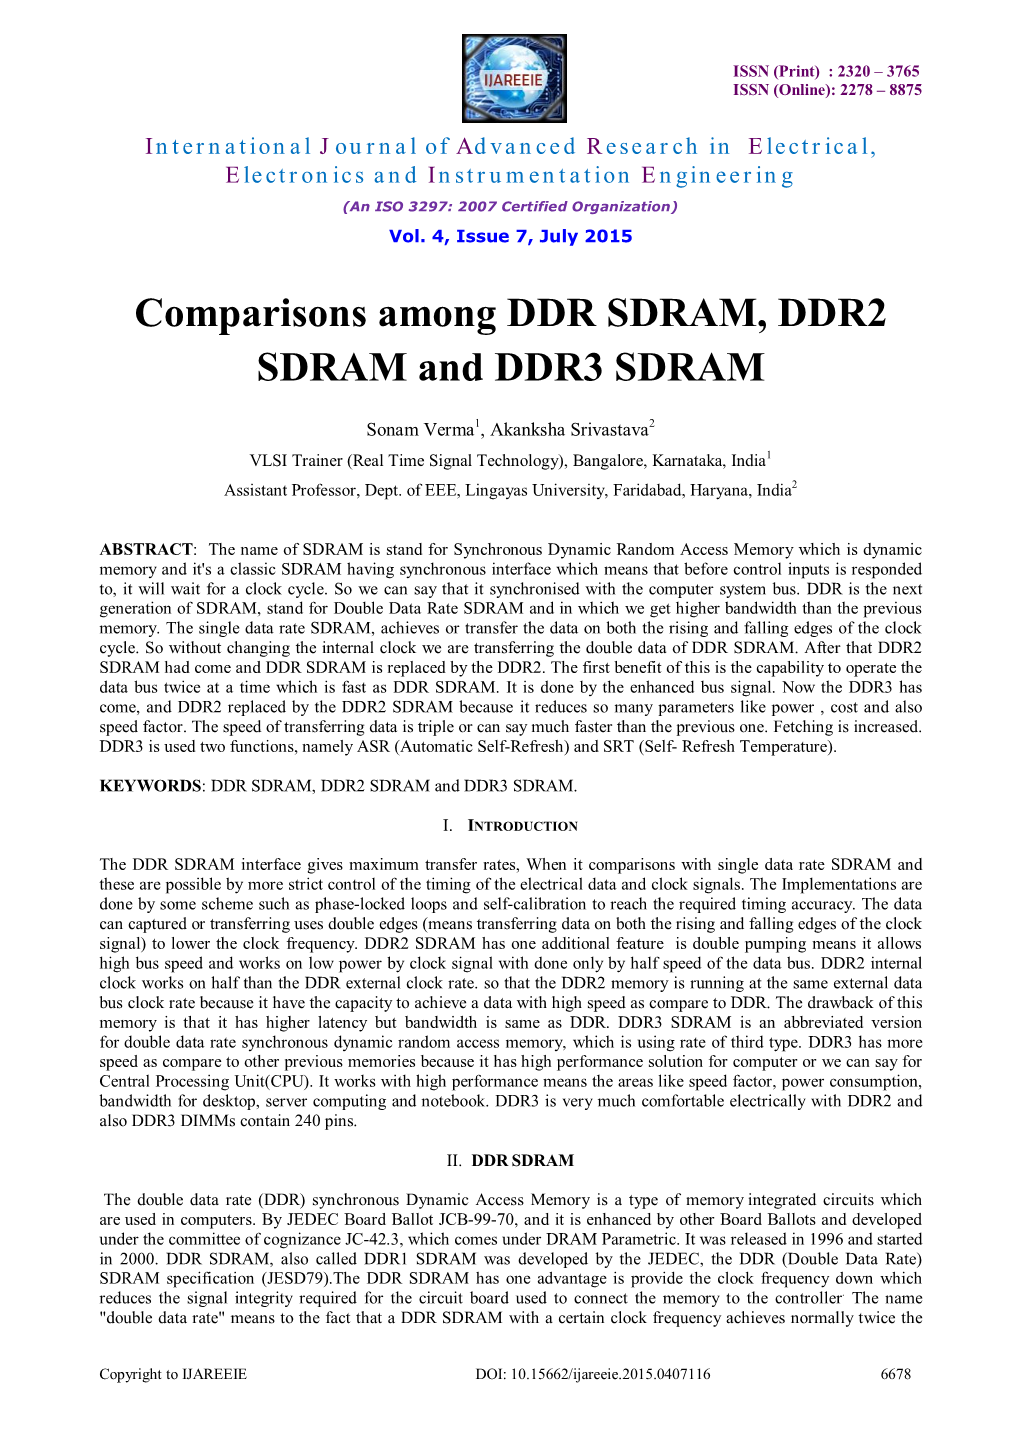 Comparisons Among DDR SDRAM, DDR2 SDRAM and DDR3 SDRAM